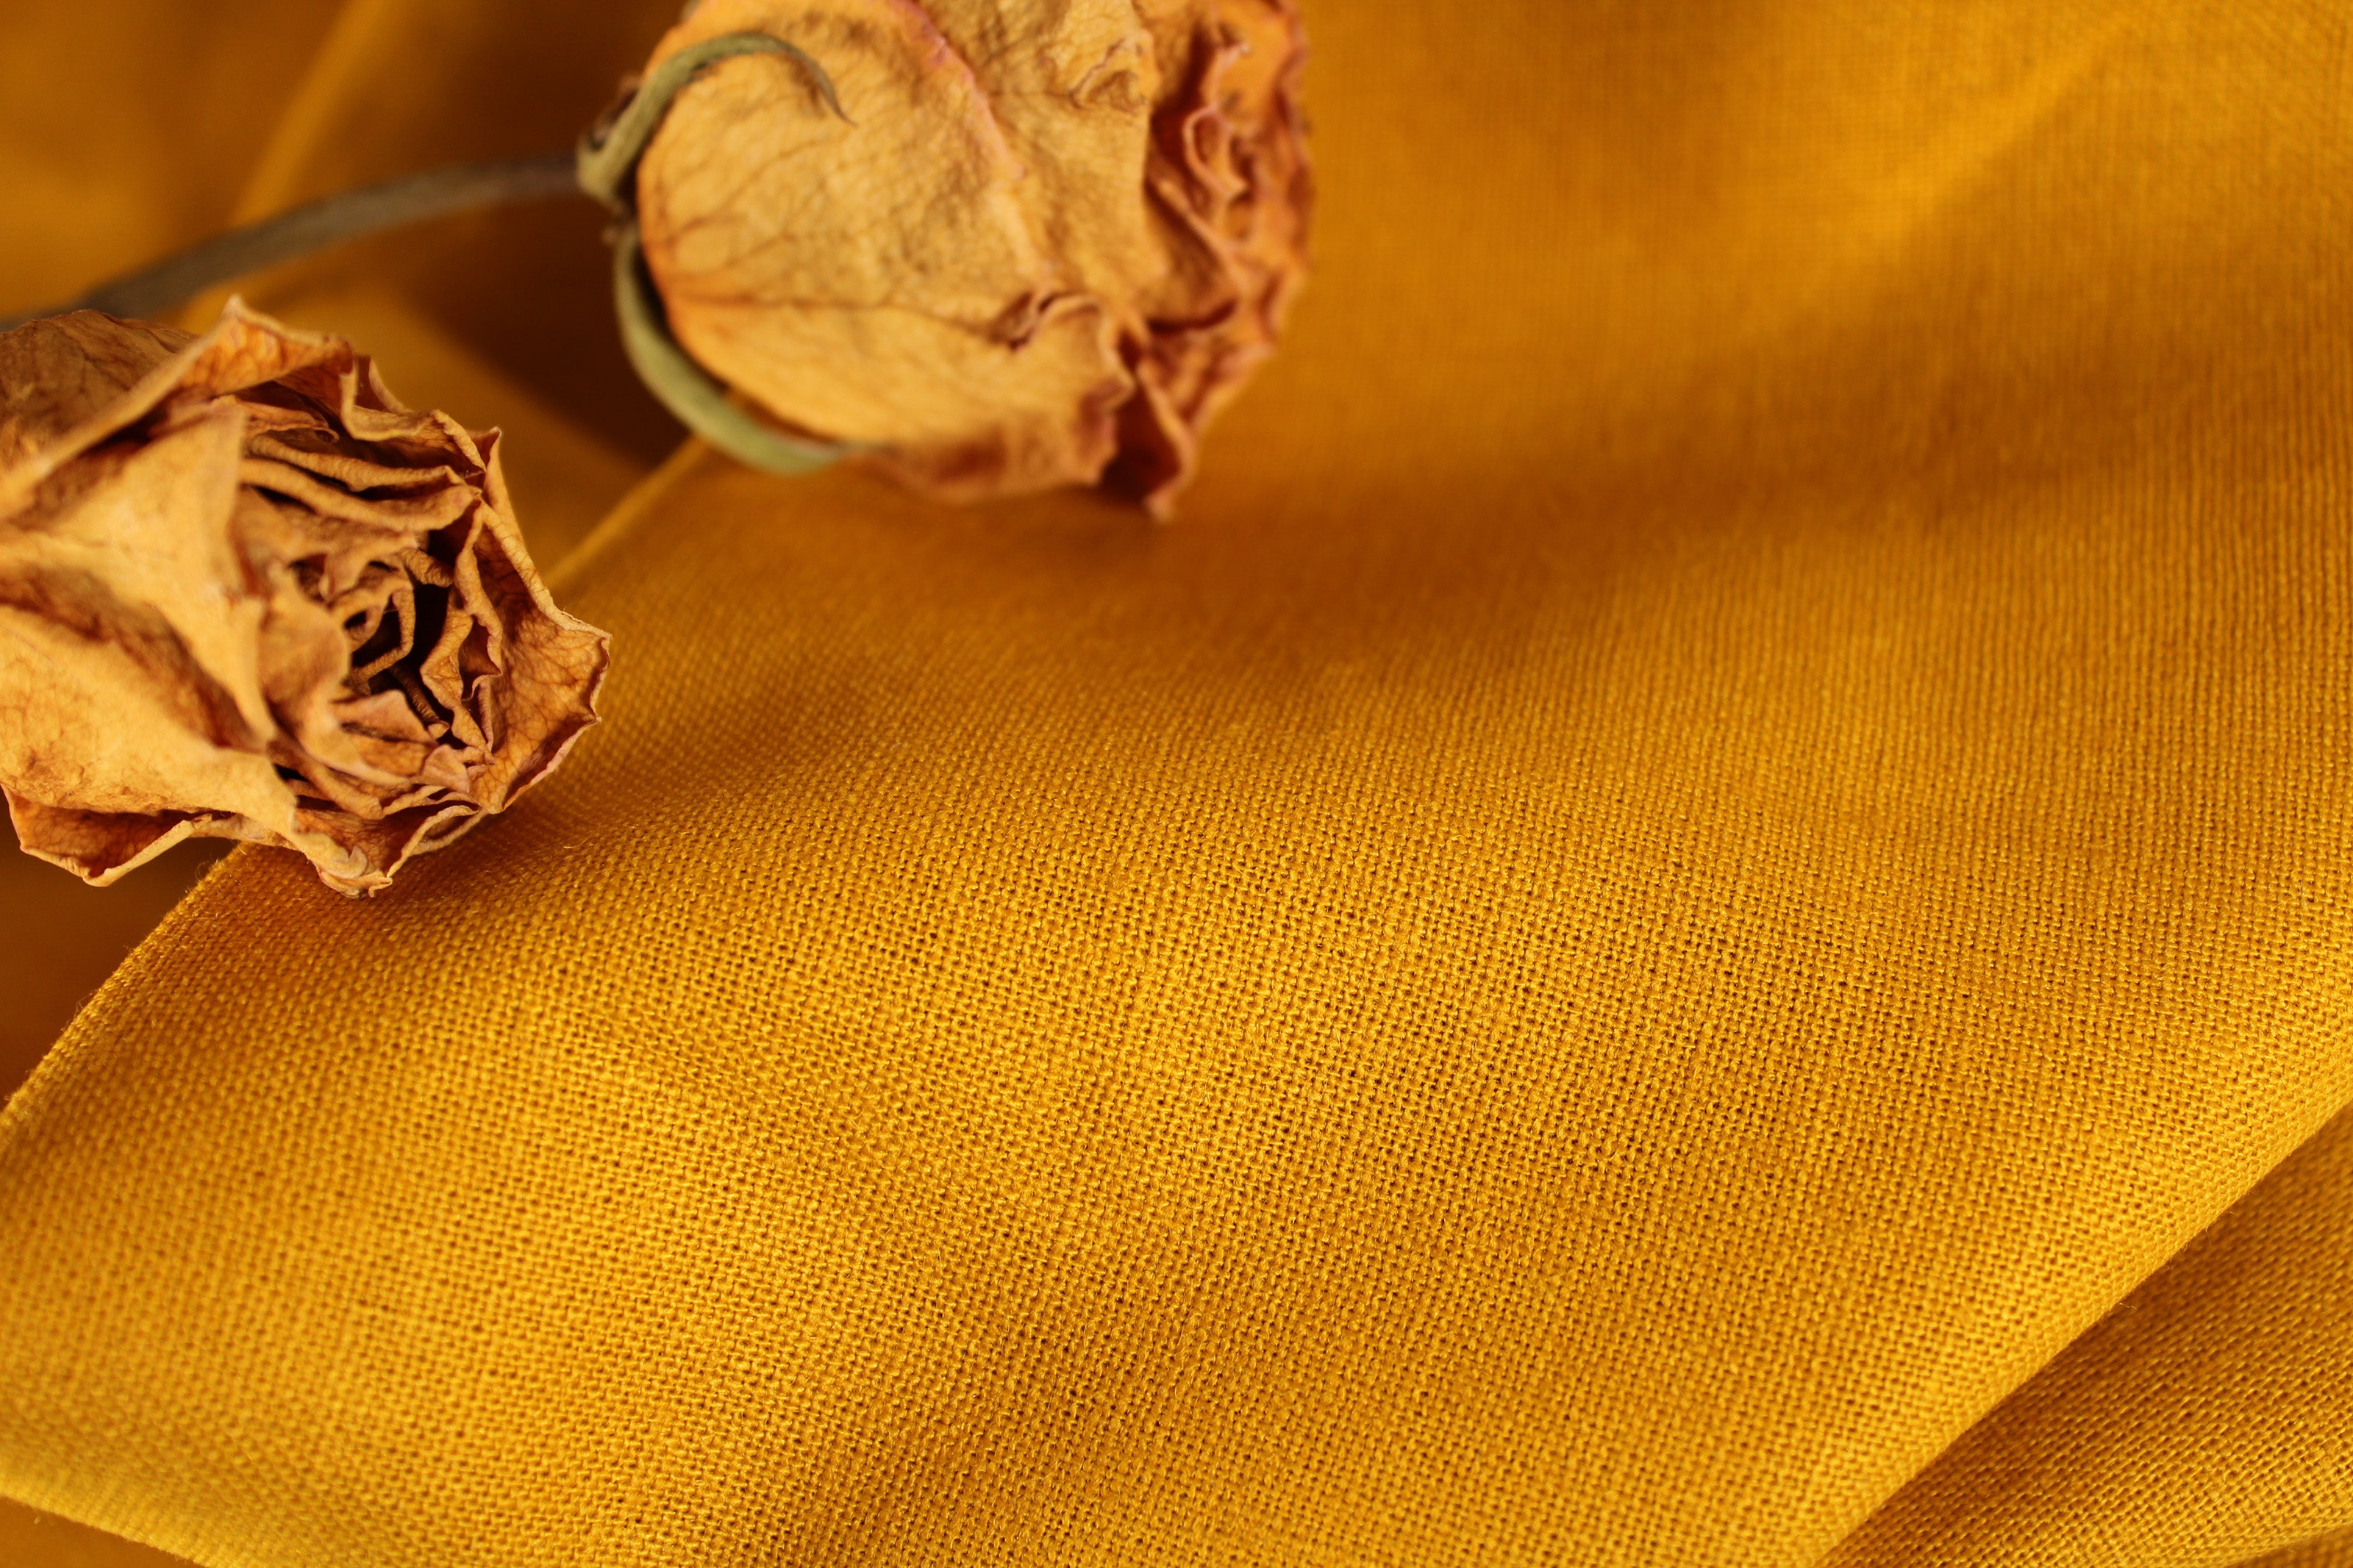 100% Linen Fabric by the Yard / Arrowwood Linen Fabric / Buy Linen Online